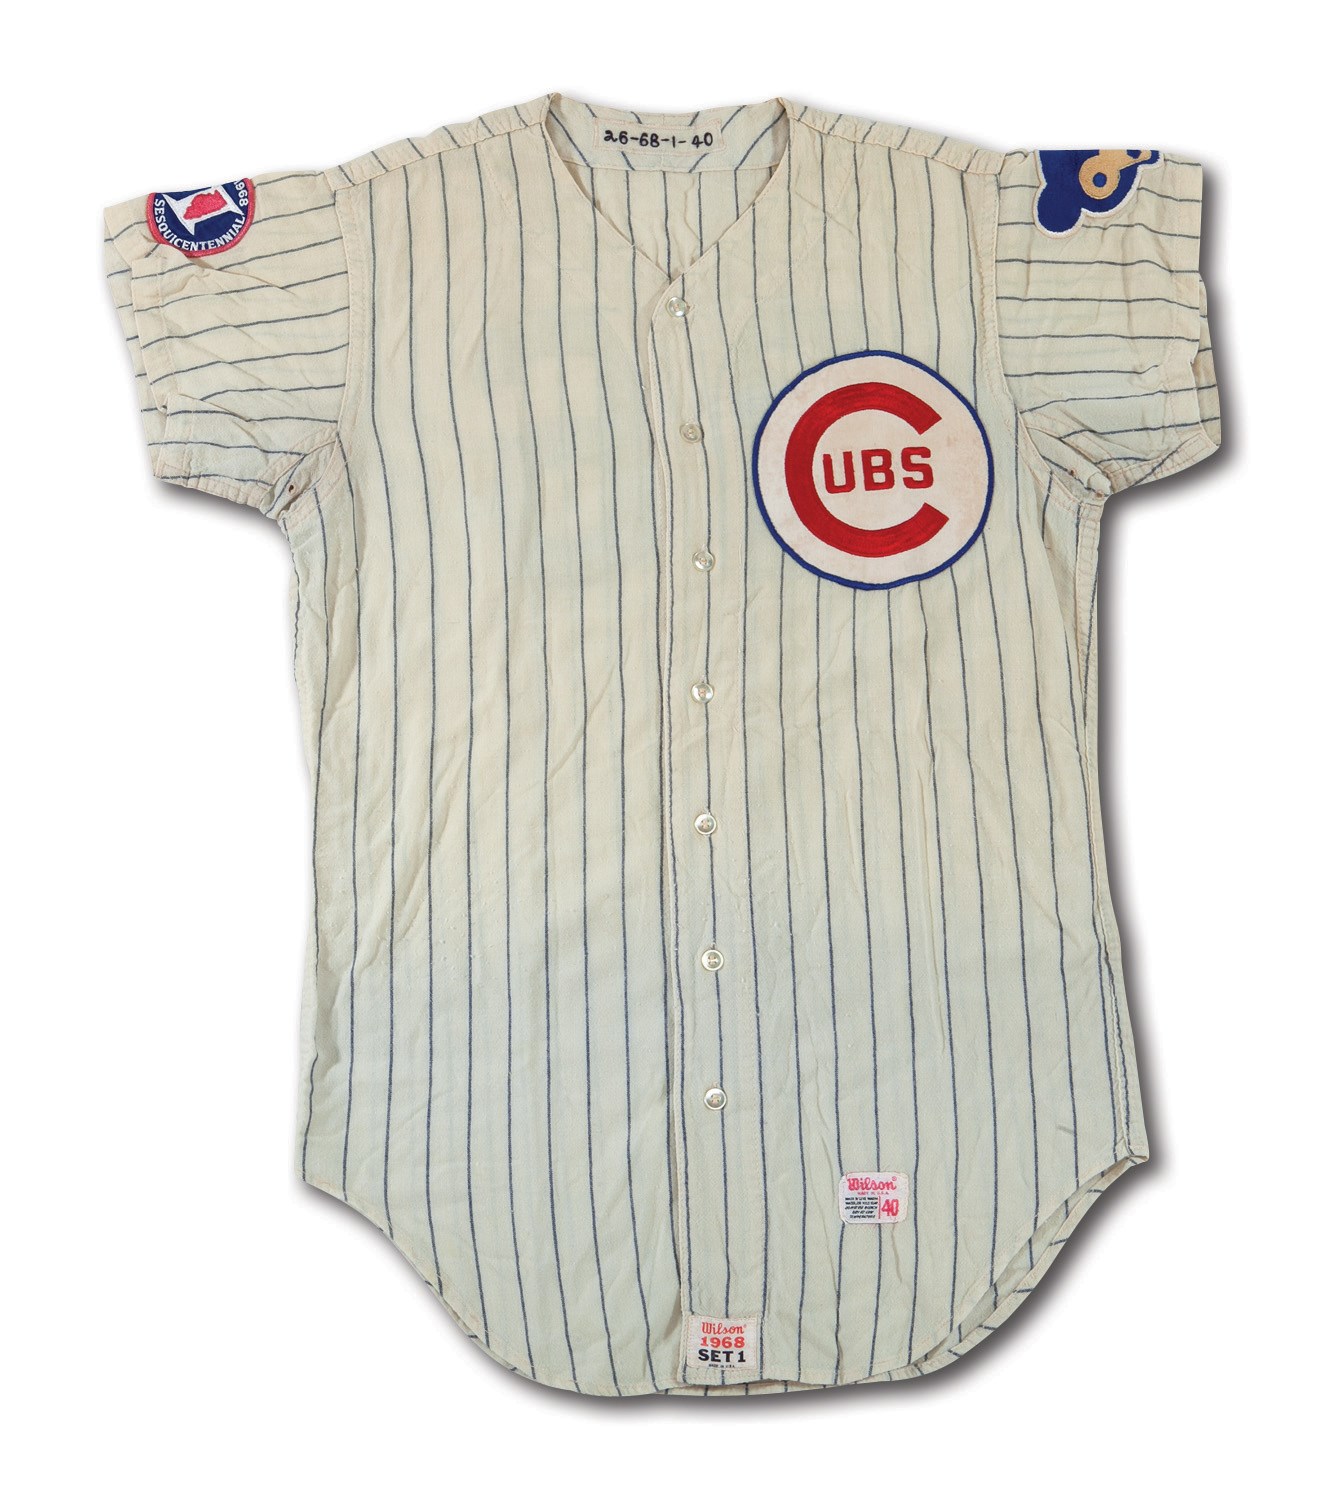 1917 cubs jersey